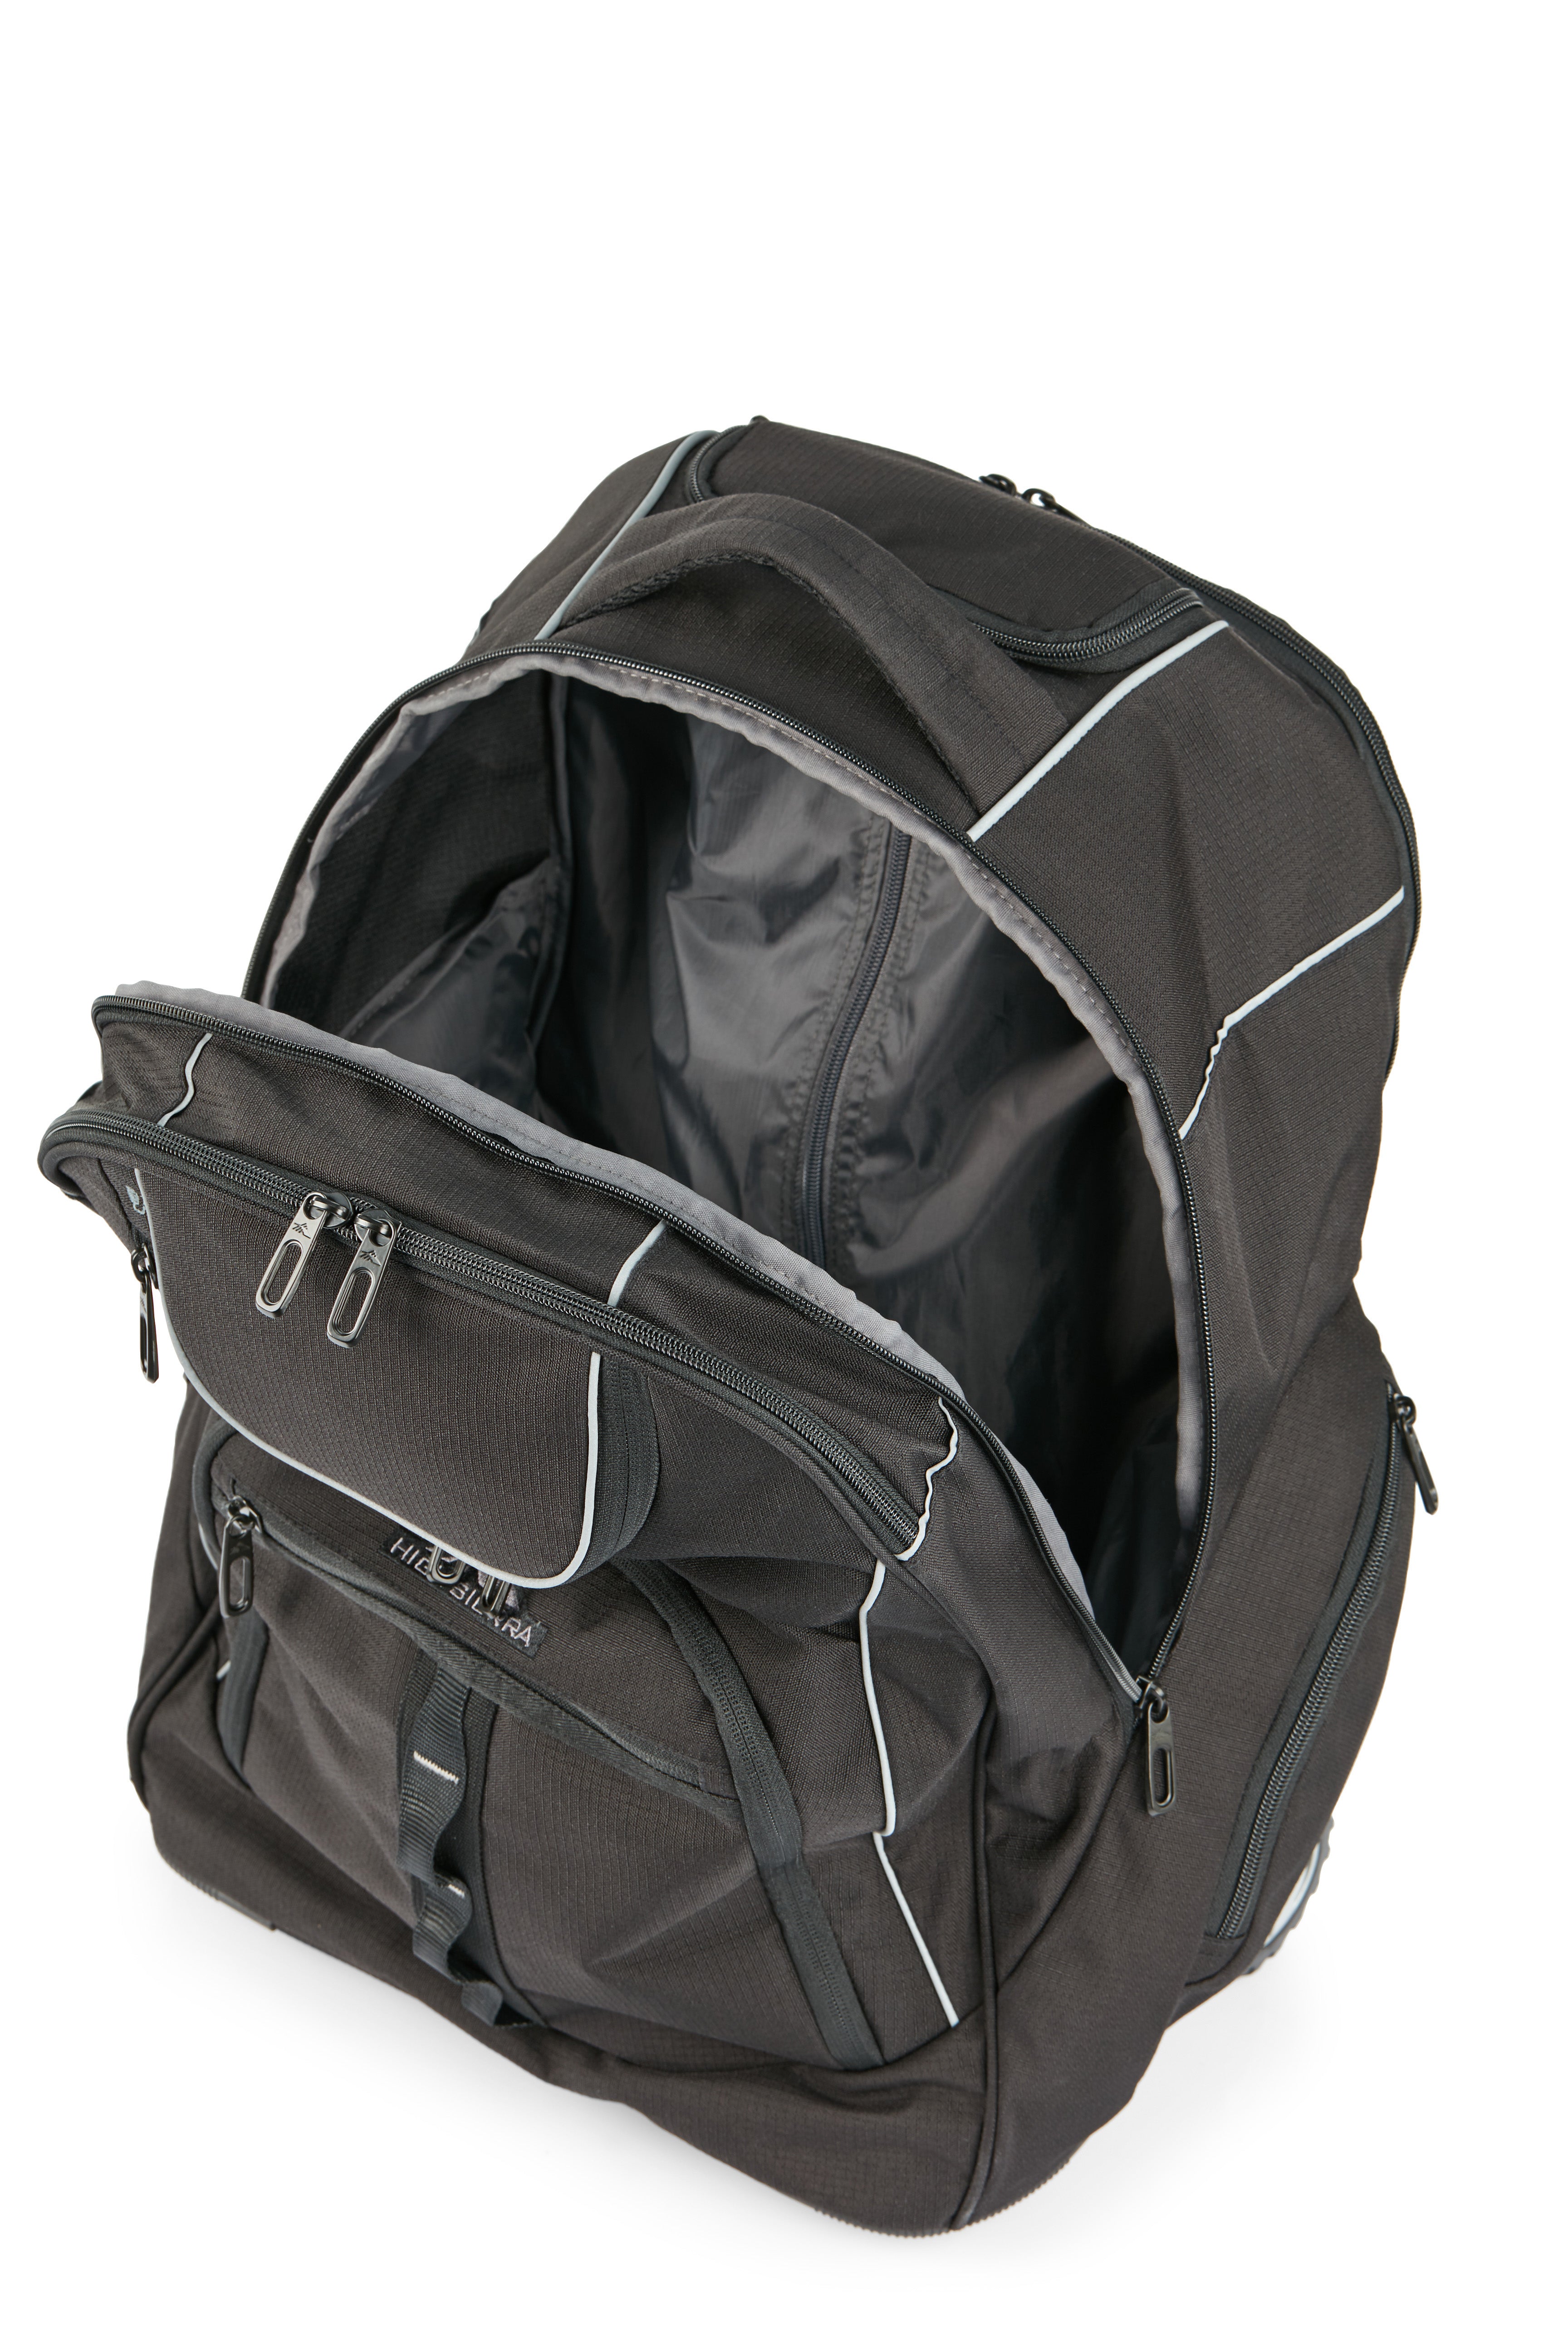 High Sierra - Access 3.0 Eco Pro Wheeled backpack - Black-8